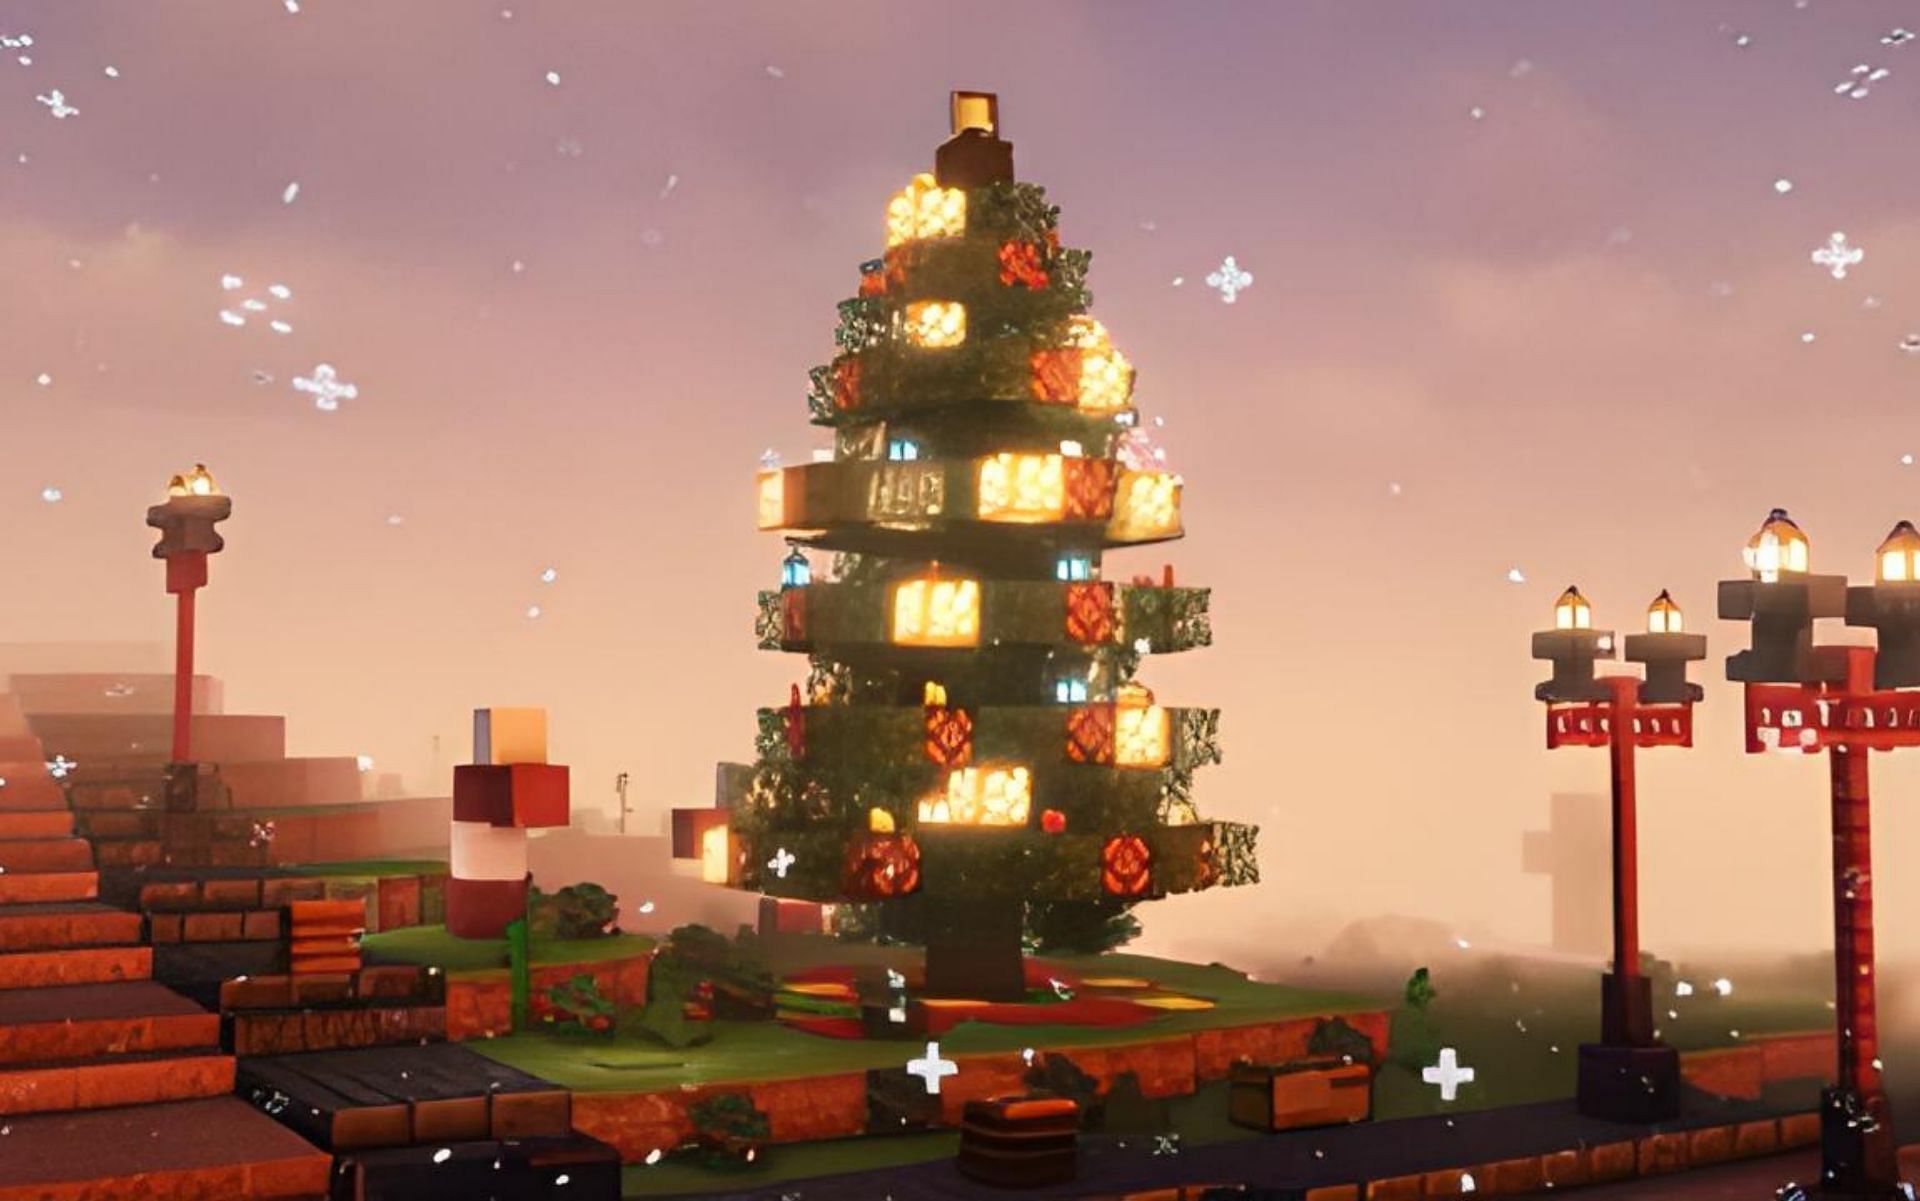 A beautiful Christmas tree build by Minecraft redditor u/RandomBoyInHere.